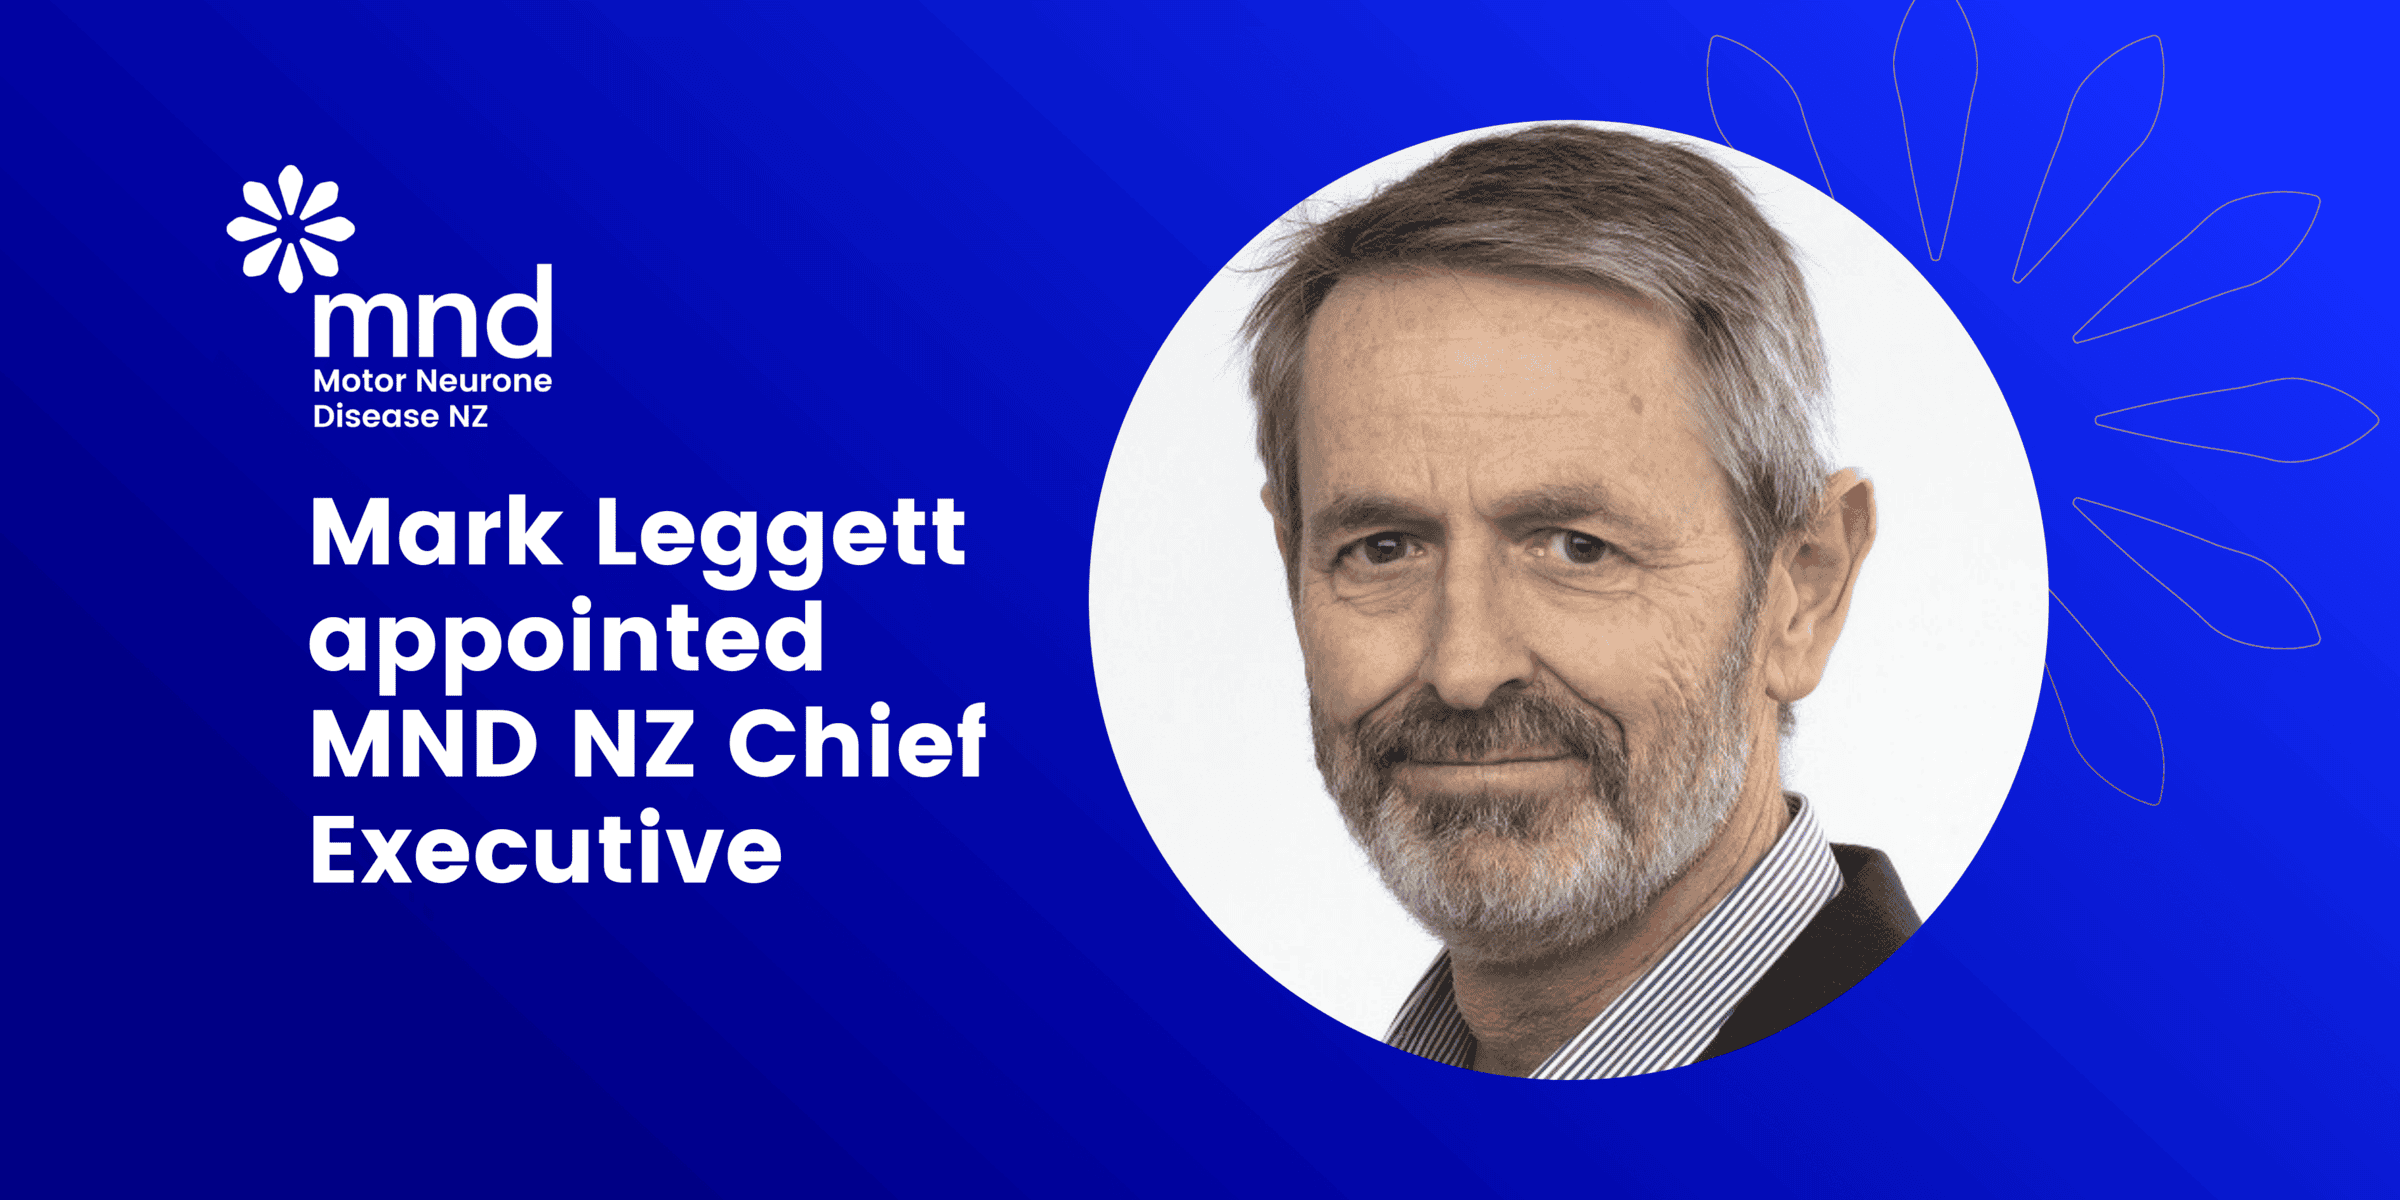 Mark Leggett appointed MND NZ Chief Executive